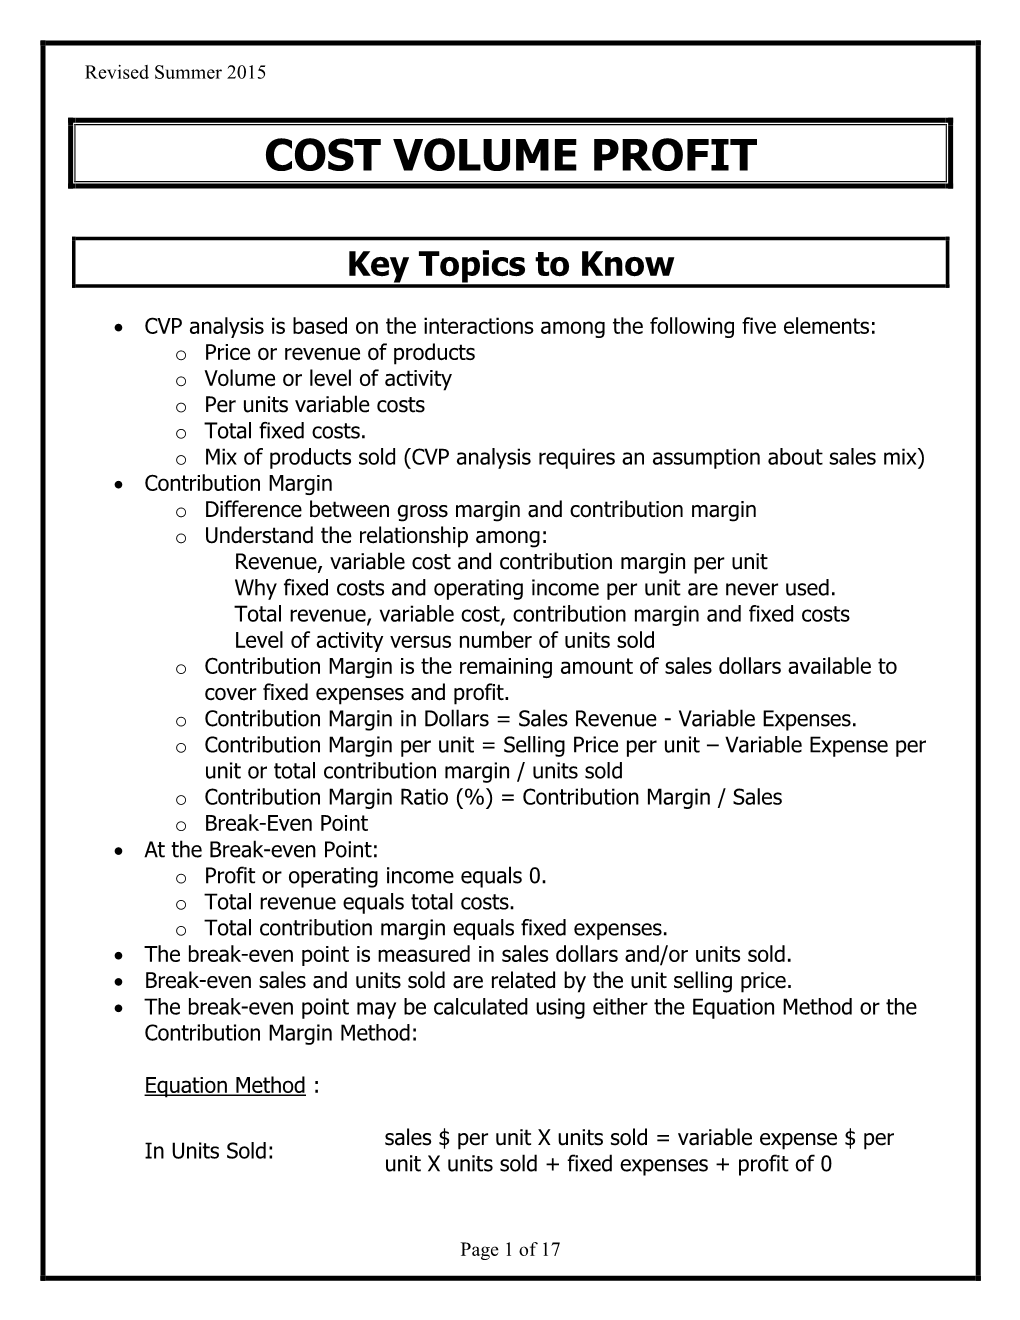 Cost Volume Profit